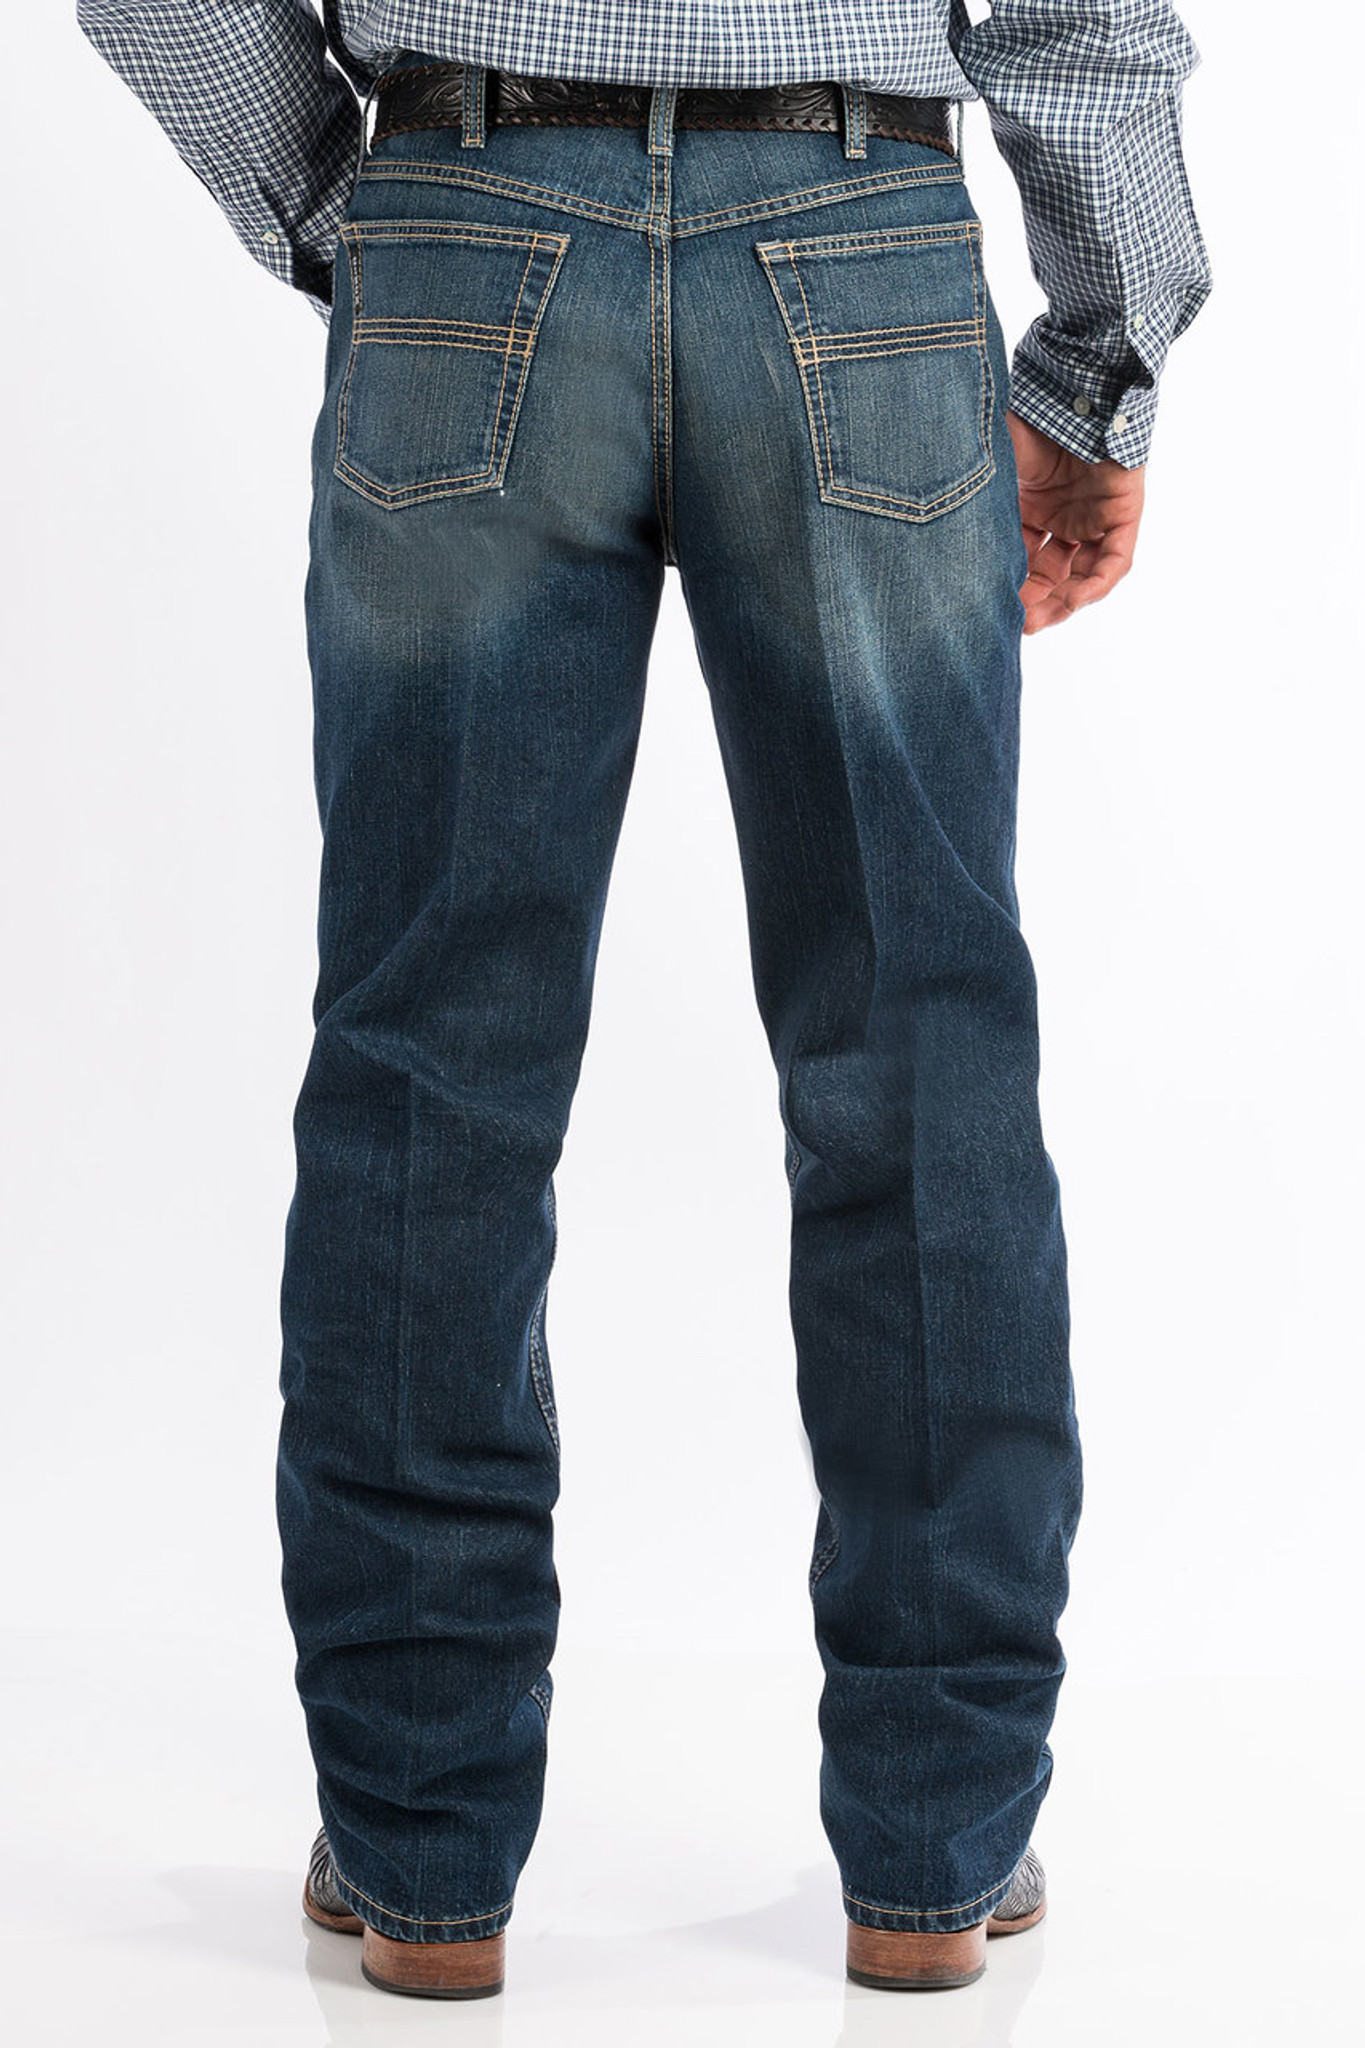 Men's Cinch Jeans, Black Label 2.0, Medium Wash - Chick Elms Grand ...